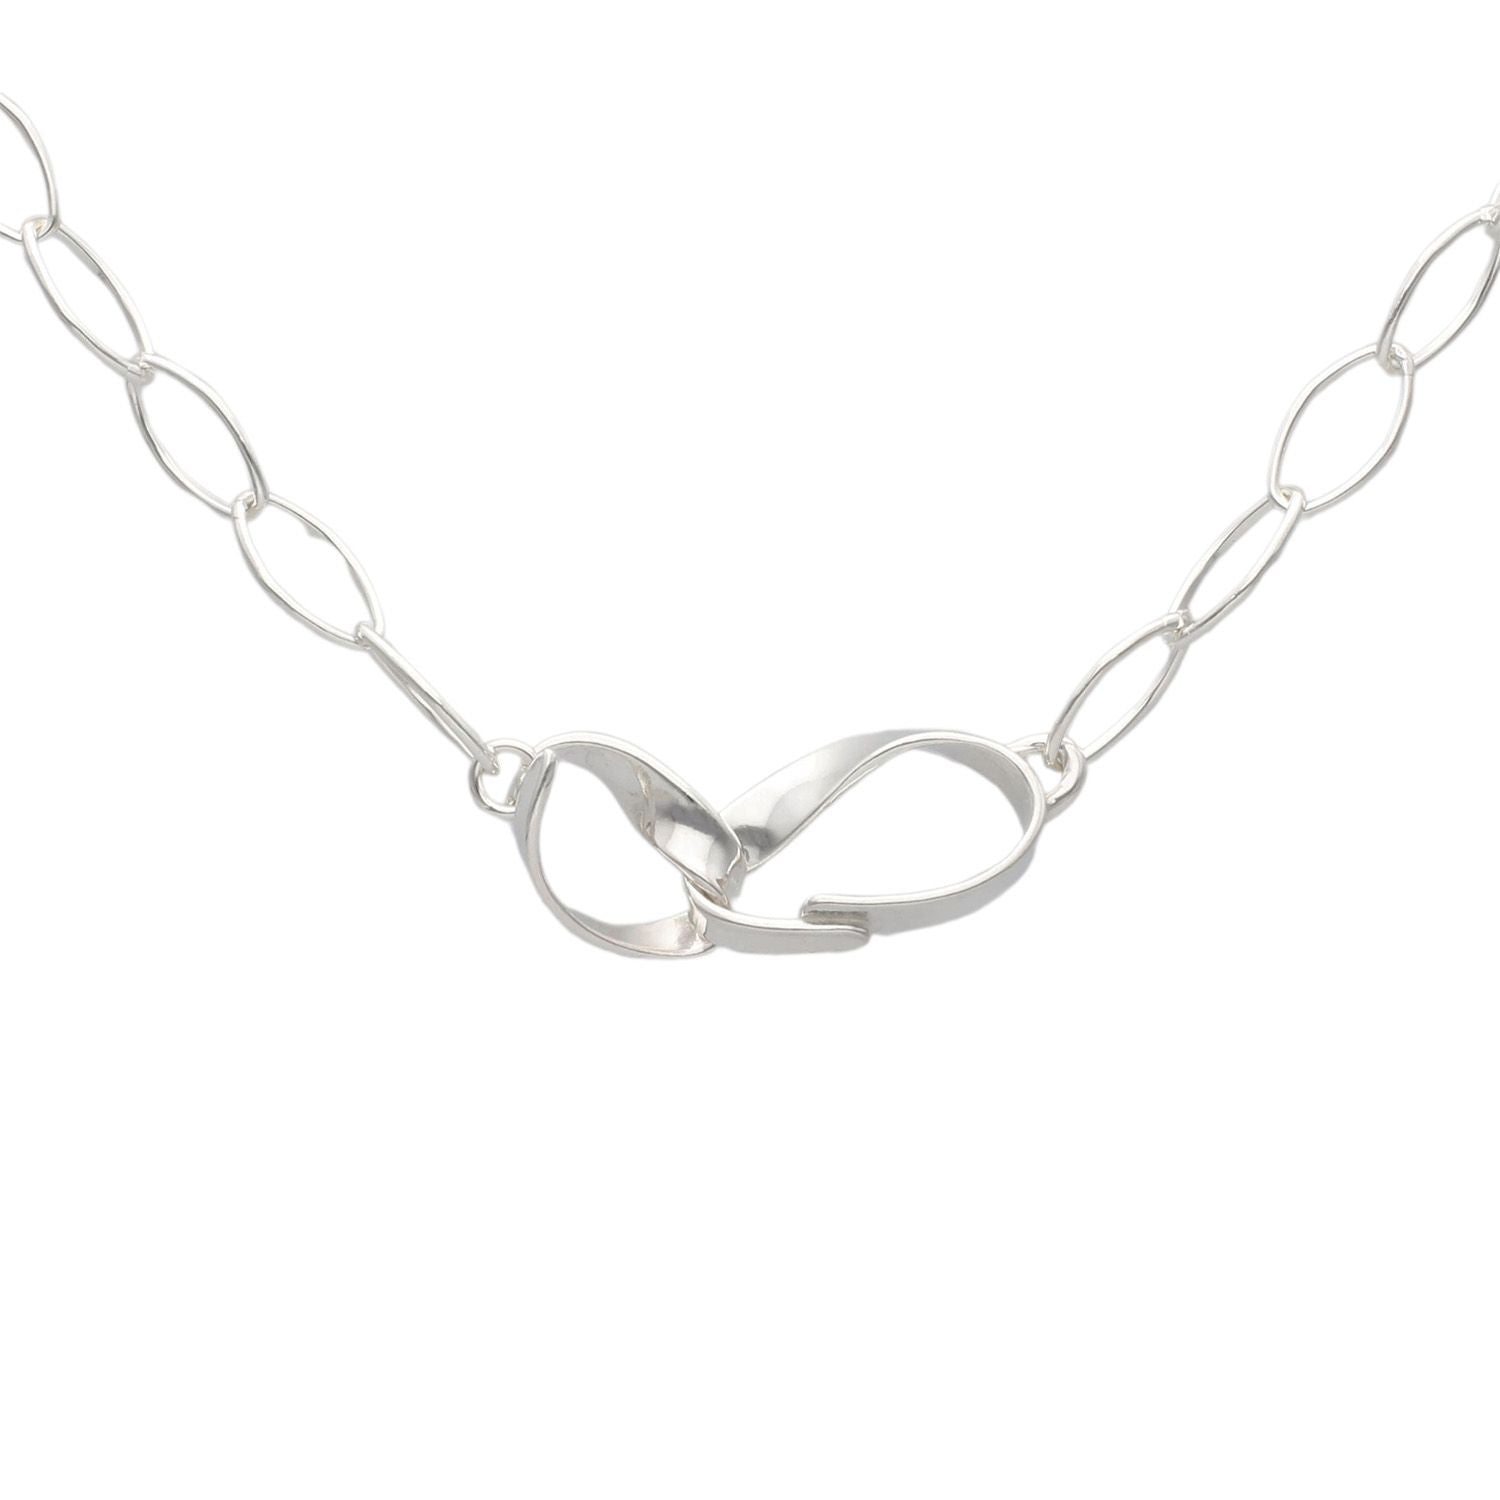 STORMSKERRY MAJA NET necklace (45 cm)